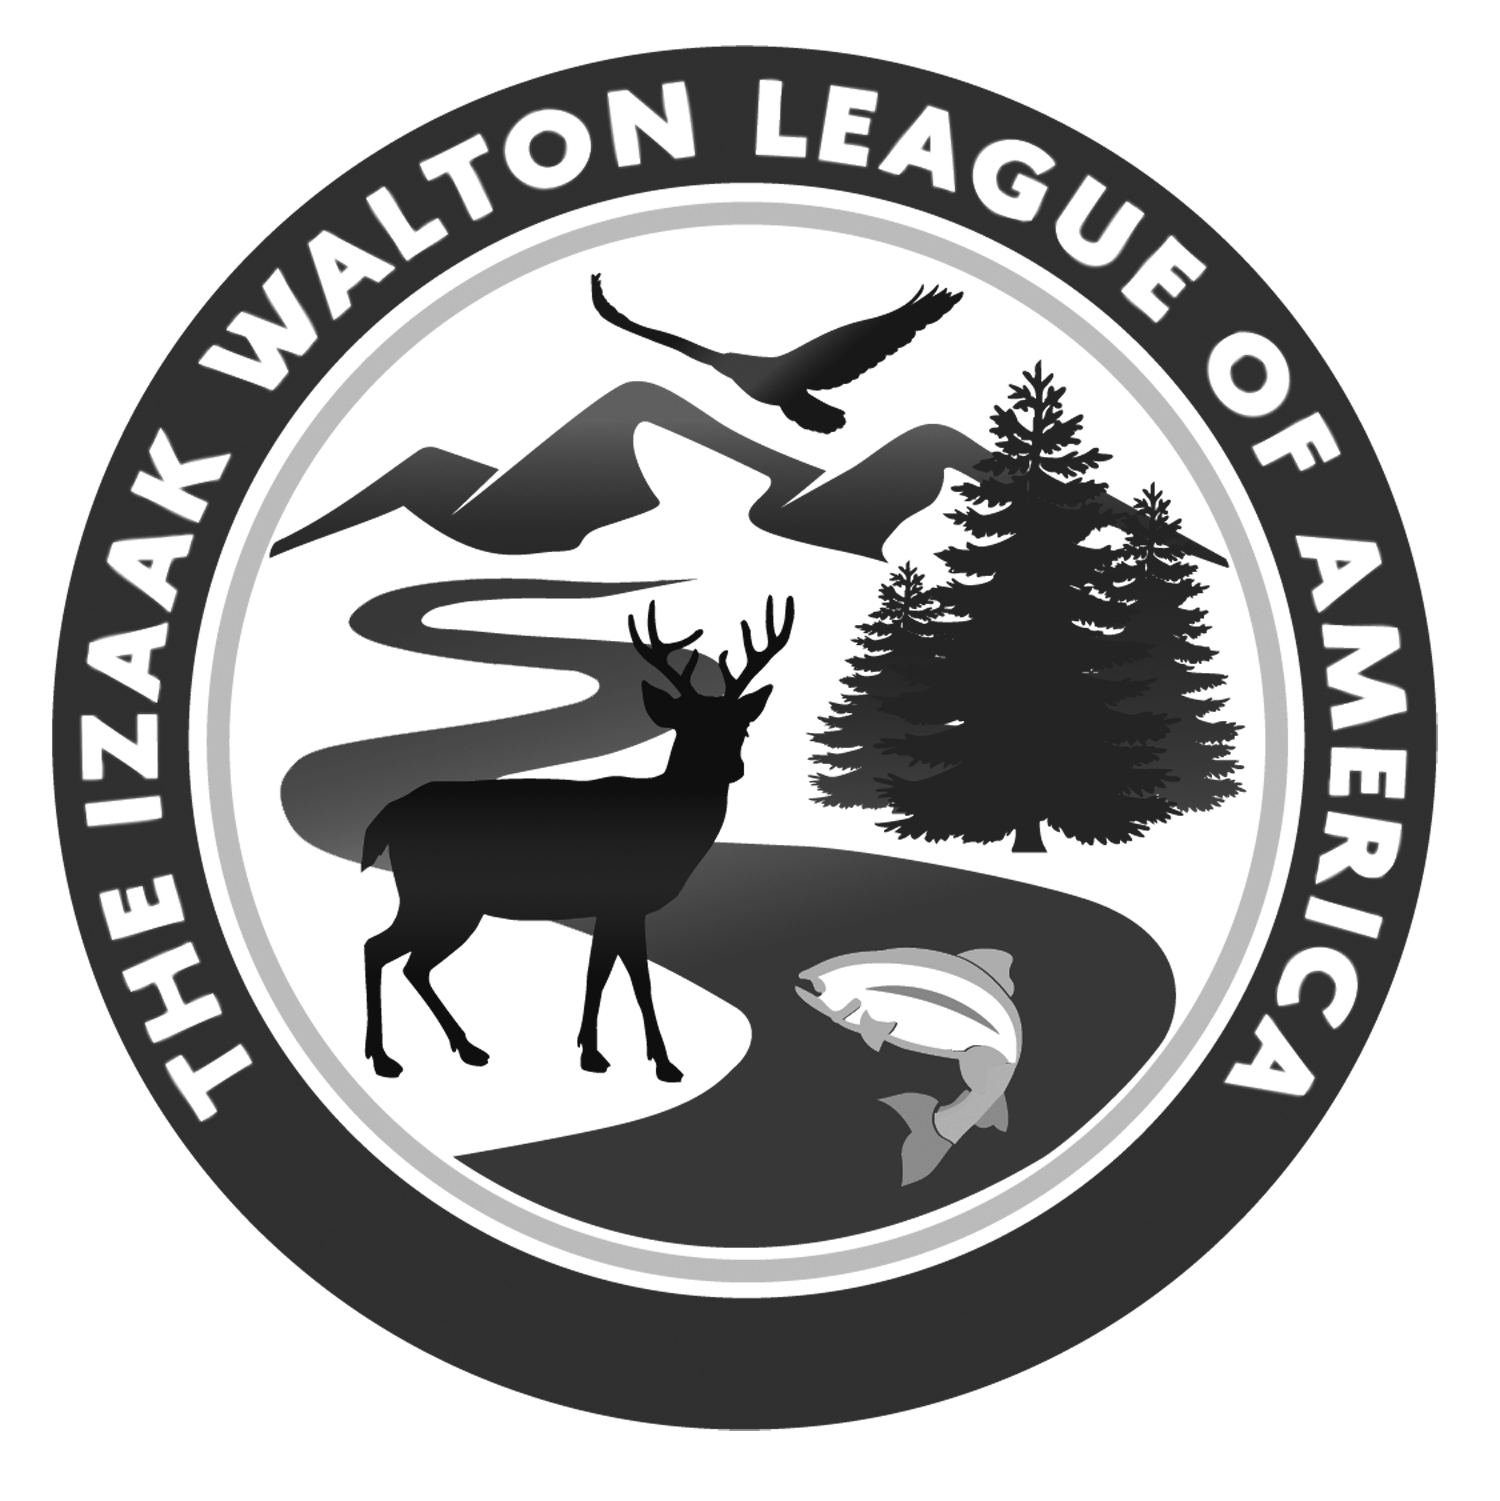 League logo - black and white